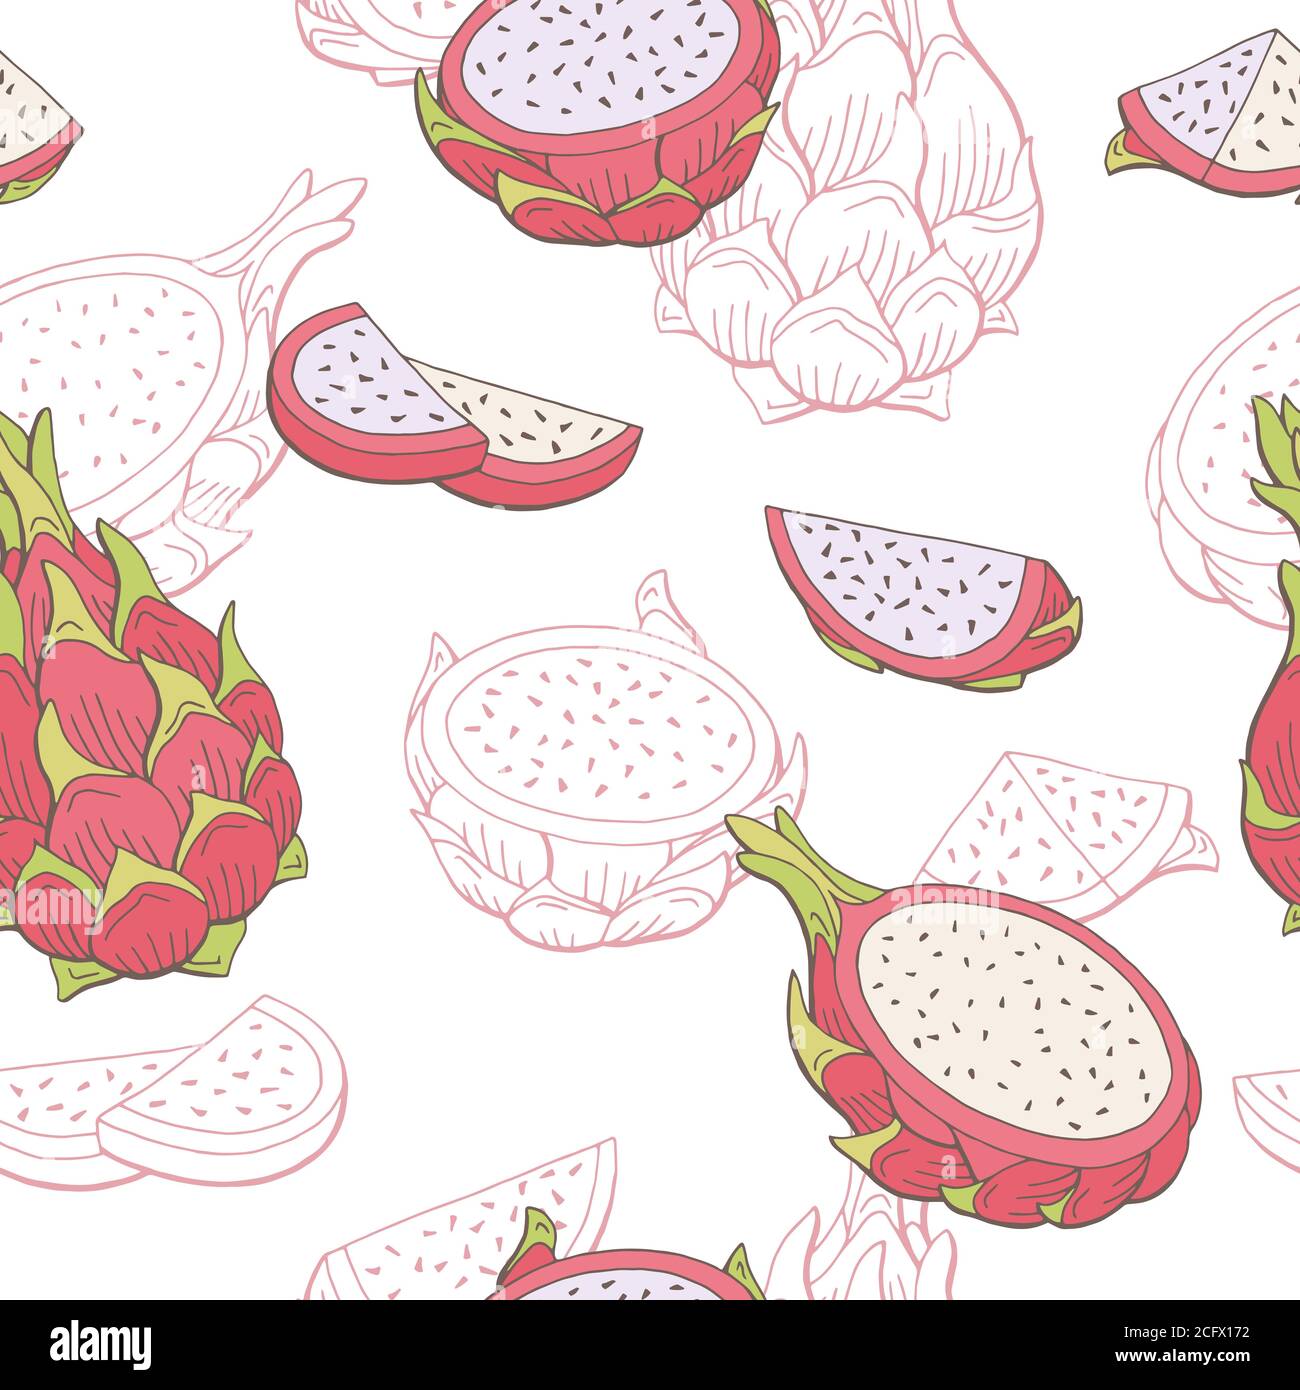 Pitaya Drachen Frucht Grafik Farbe nahtlose Muster Skizze Illustration Vektor Stock Vektor